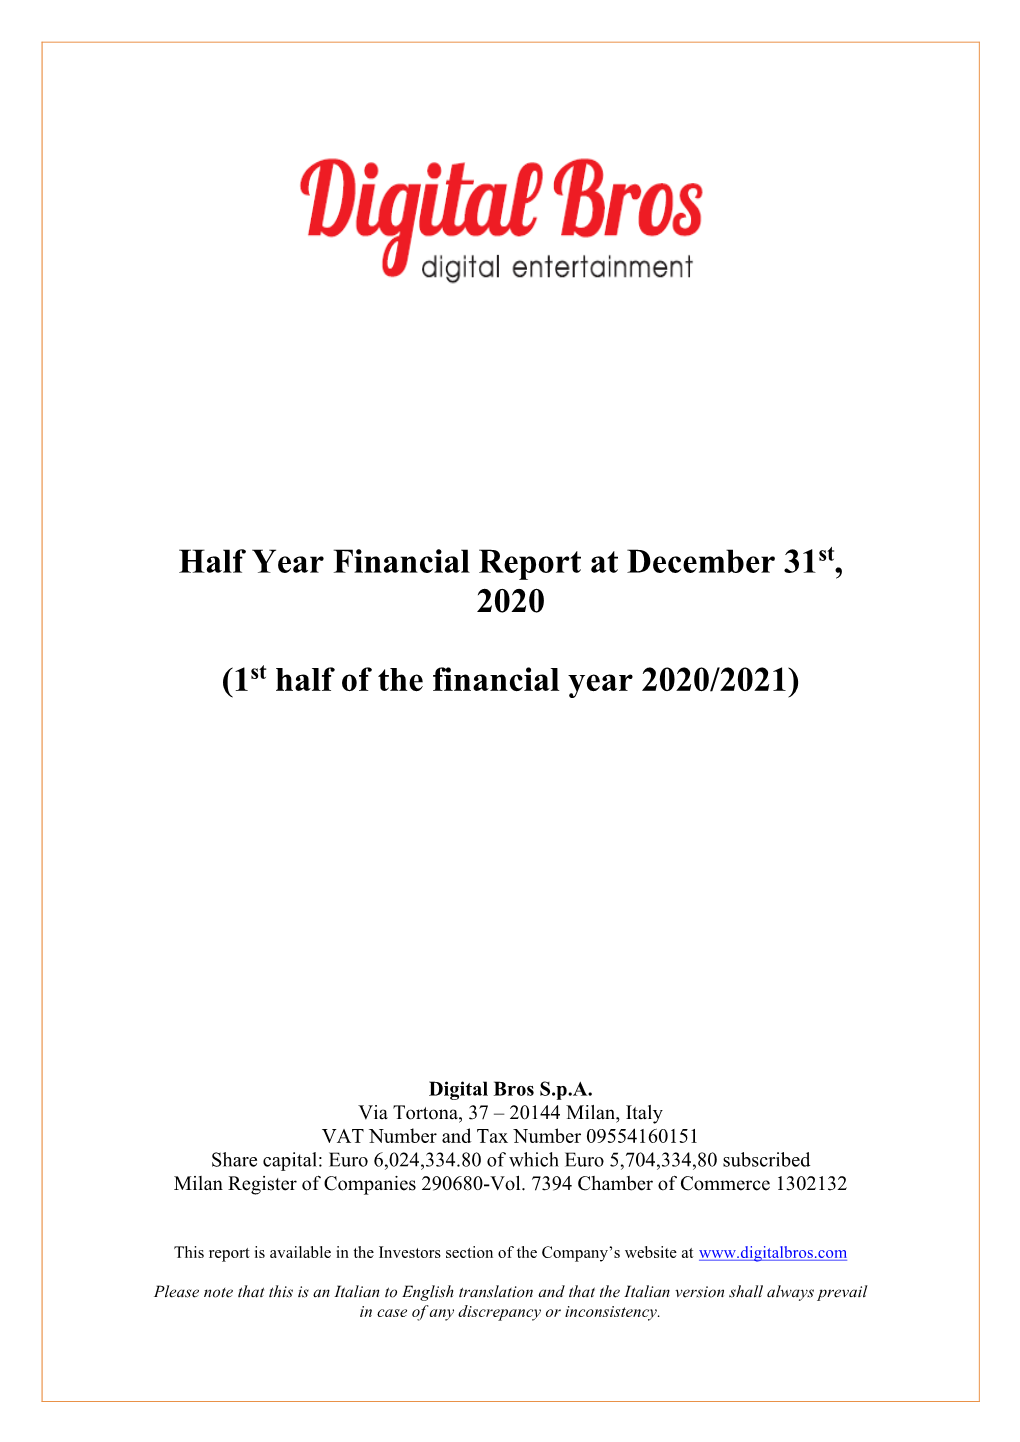 Digital Bros Group Half Year Financial Report at December 31St, 2020